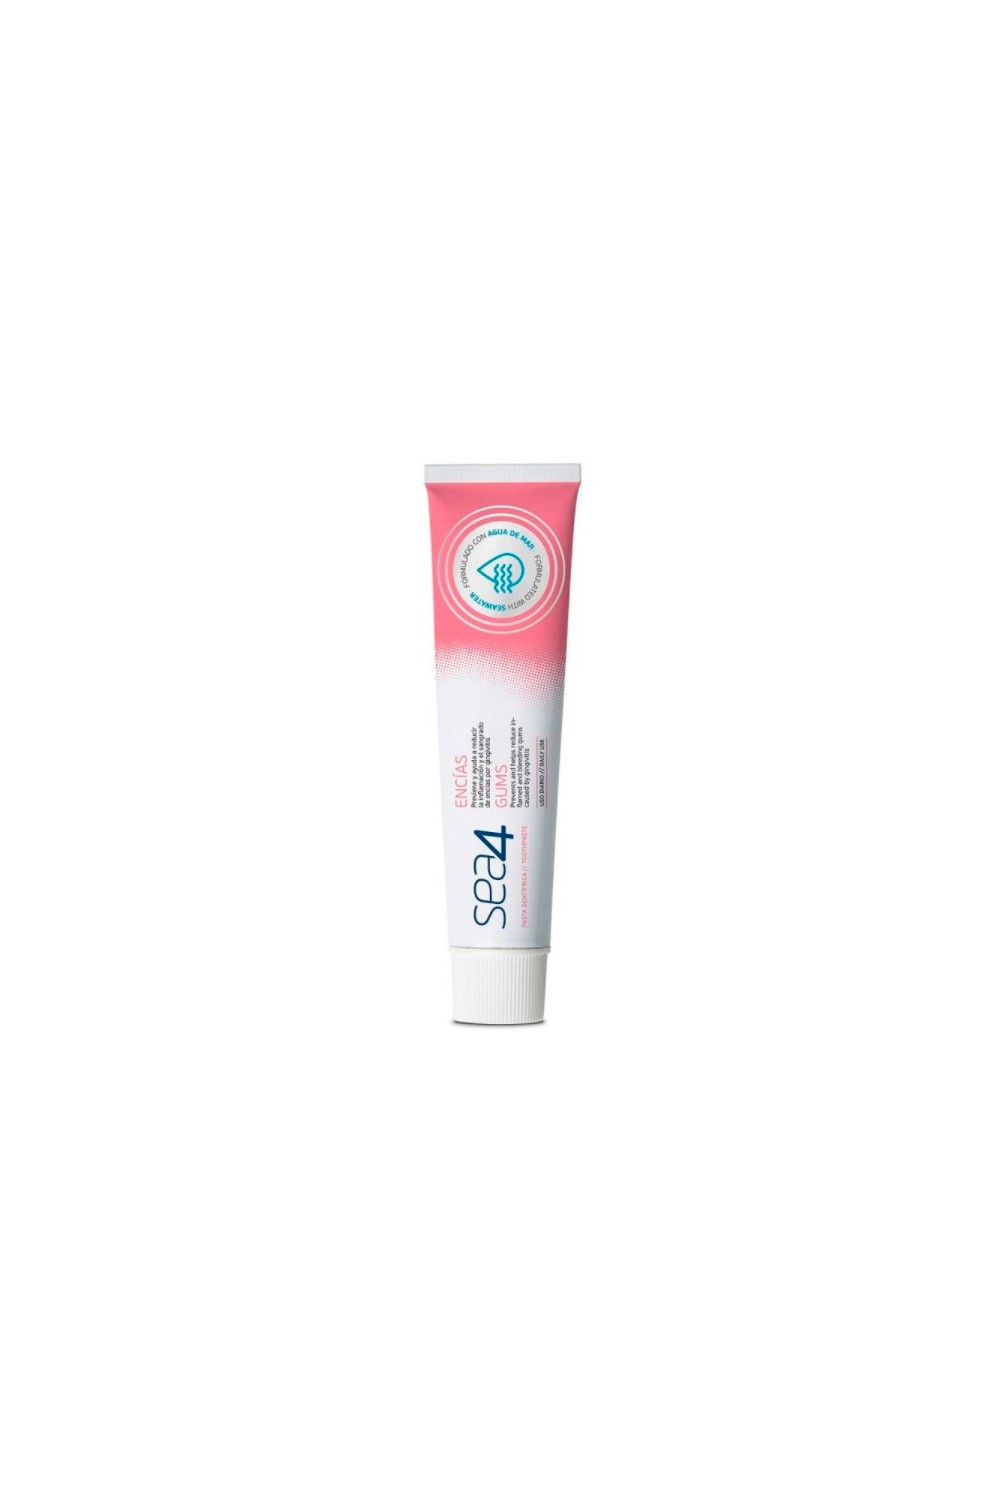 EBBE - Sea4 Gum Toothpaste 75ml